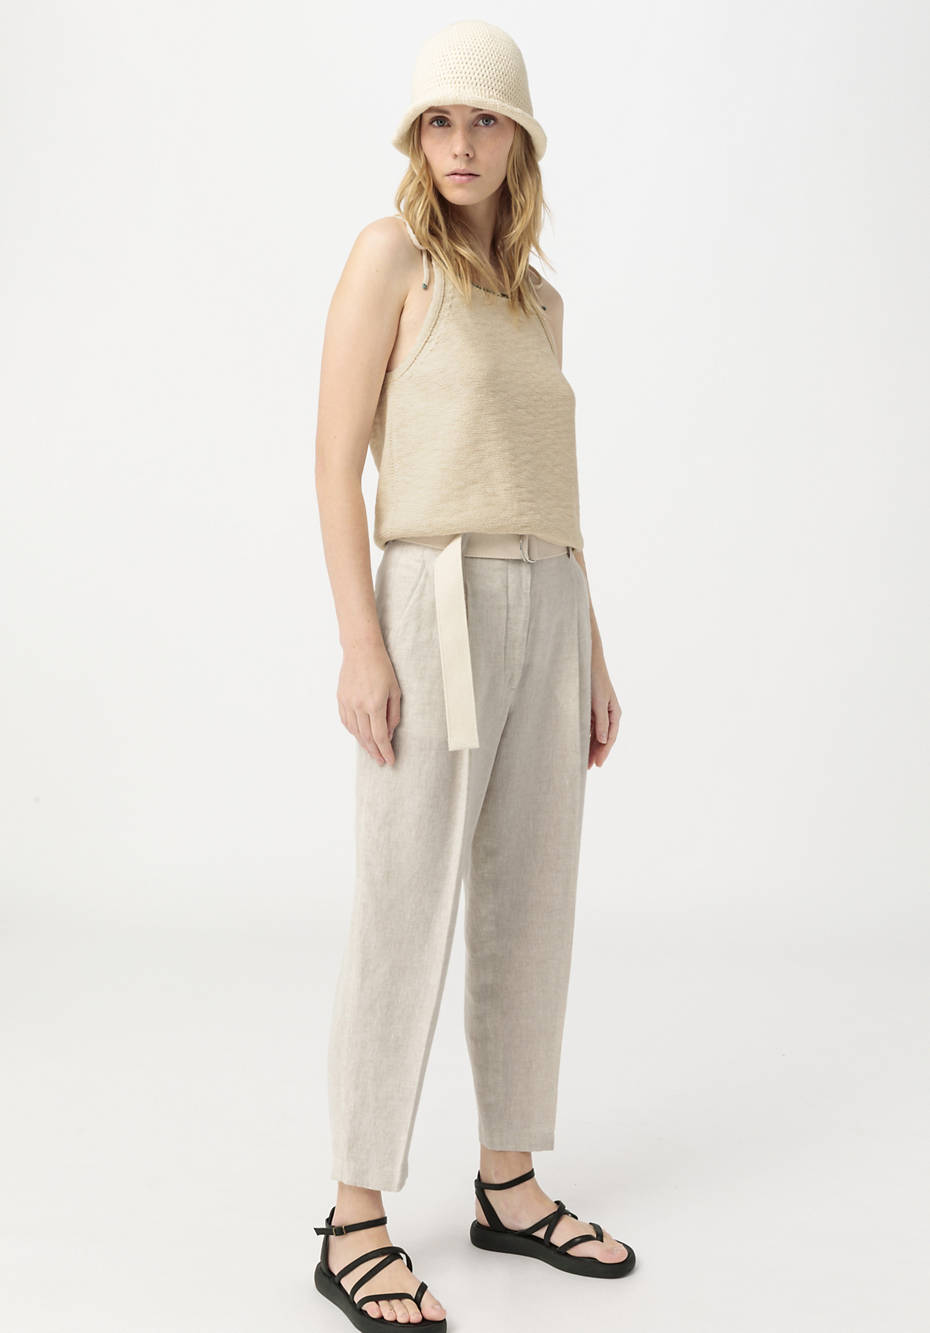 High-waist trousers made from pure organic linen